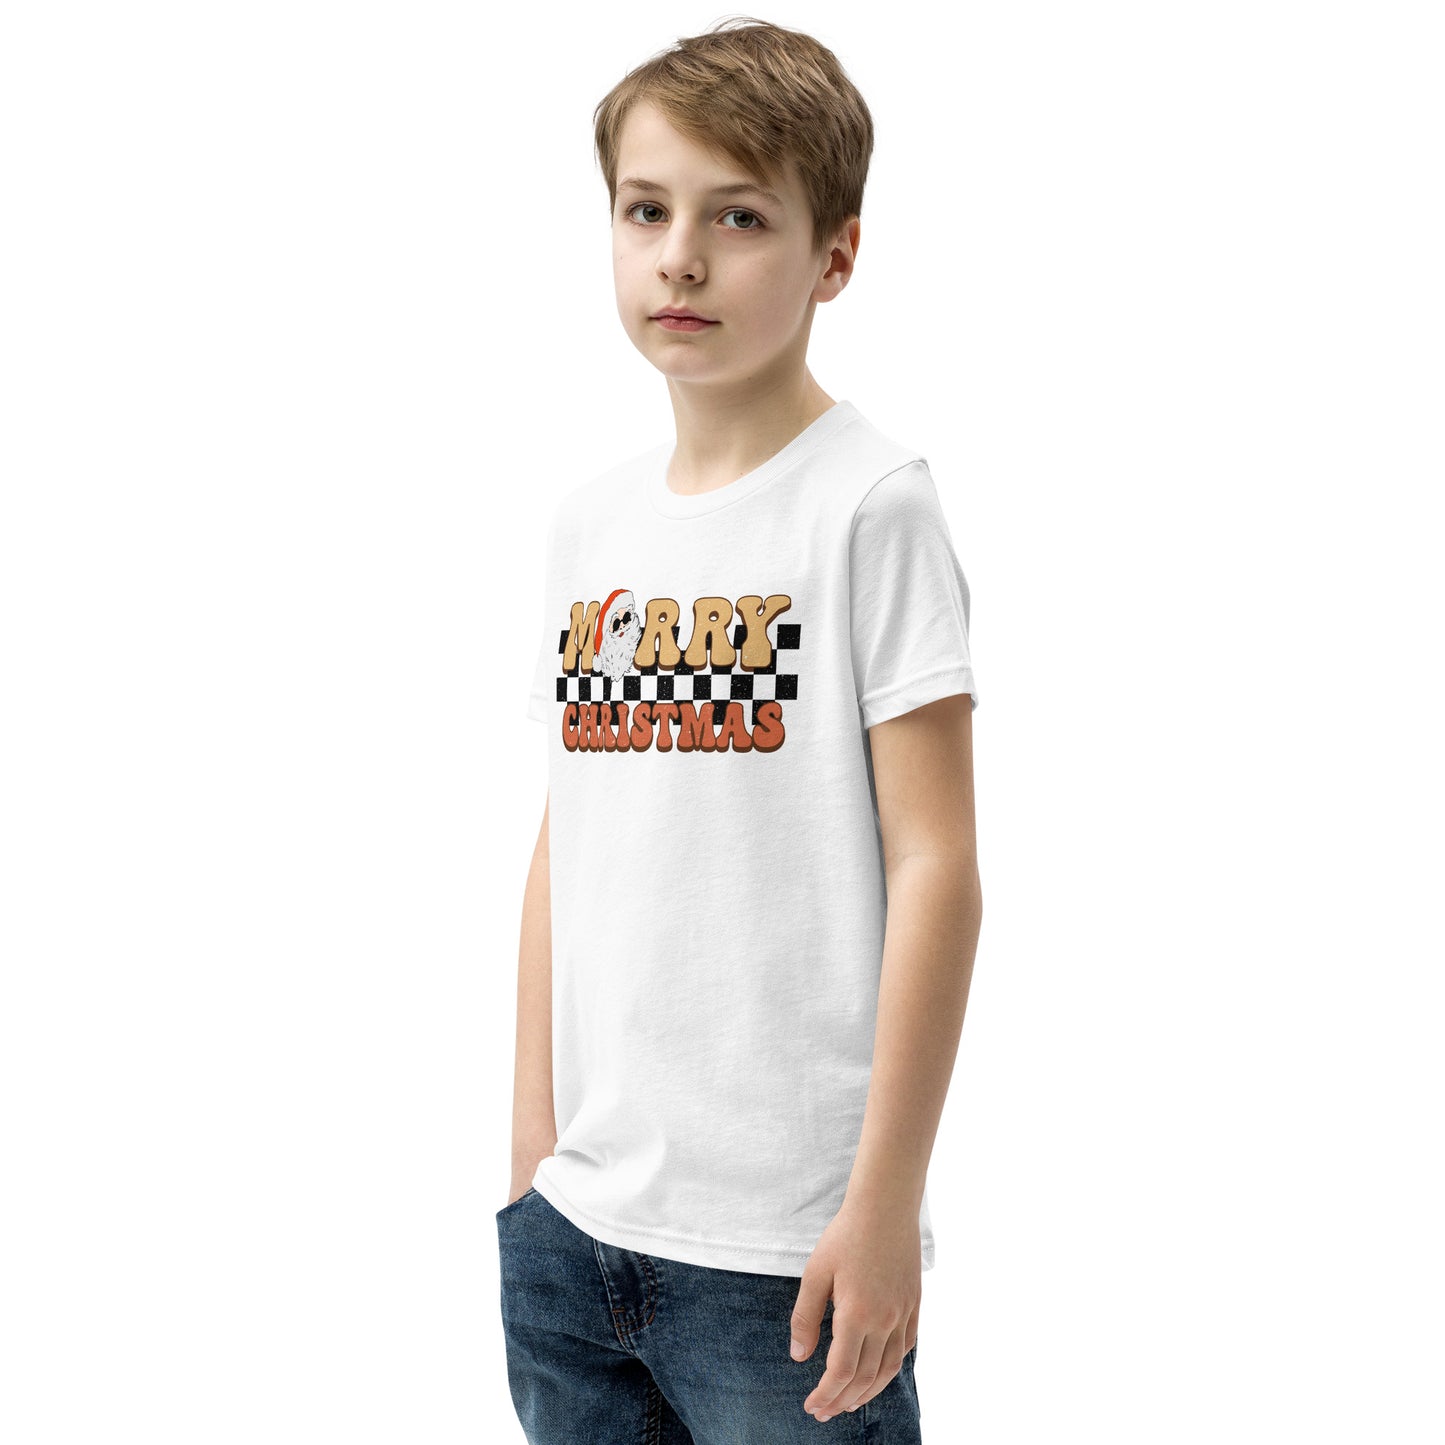 "Checkered Christmas" Youth T-Shirt